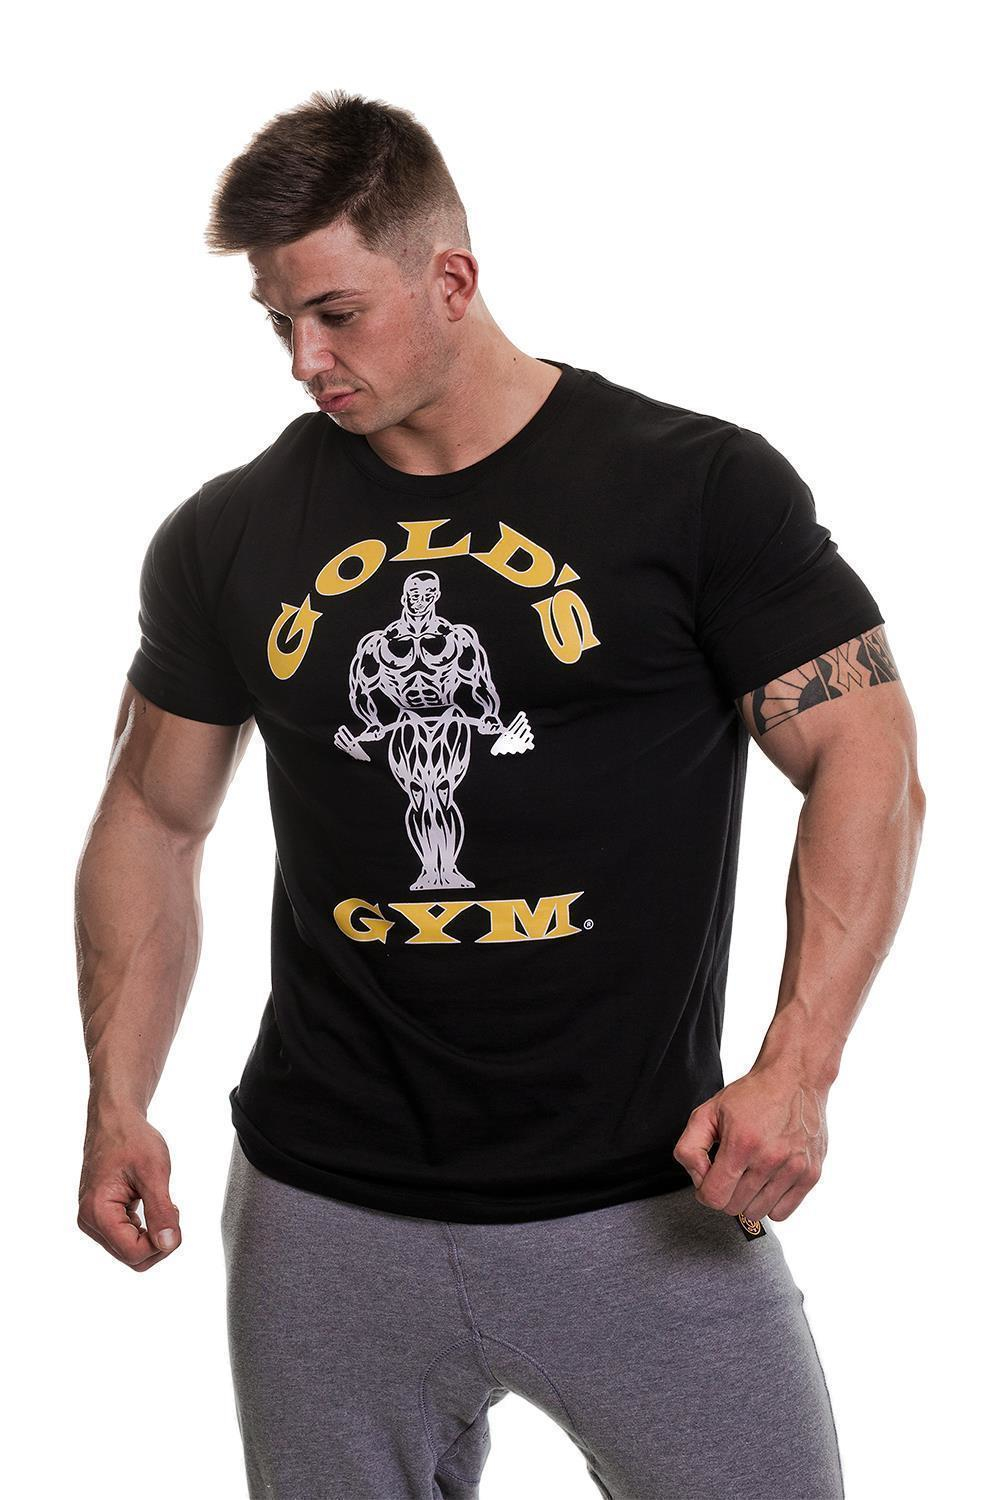 Golds Gym Muscle Joe T Shirt Bodybuilding Fitness Shirt Mens Black 19